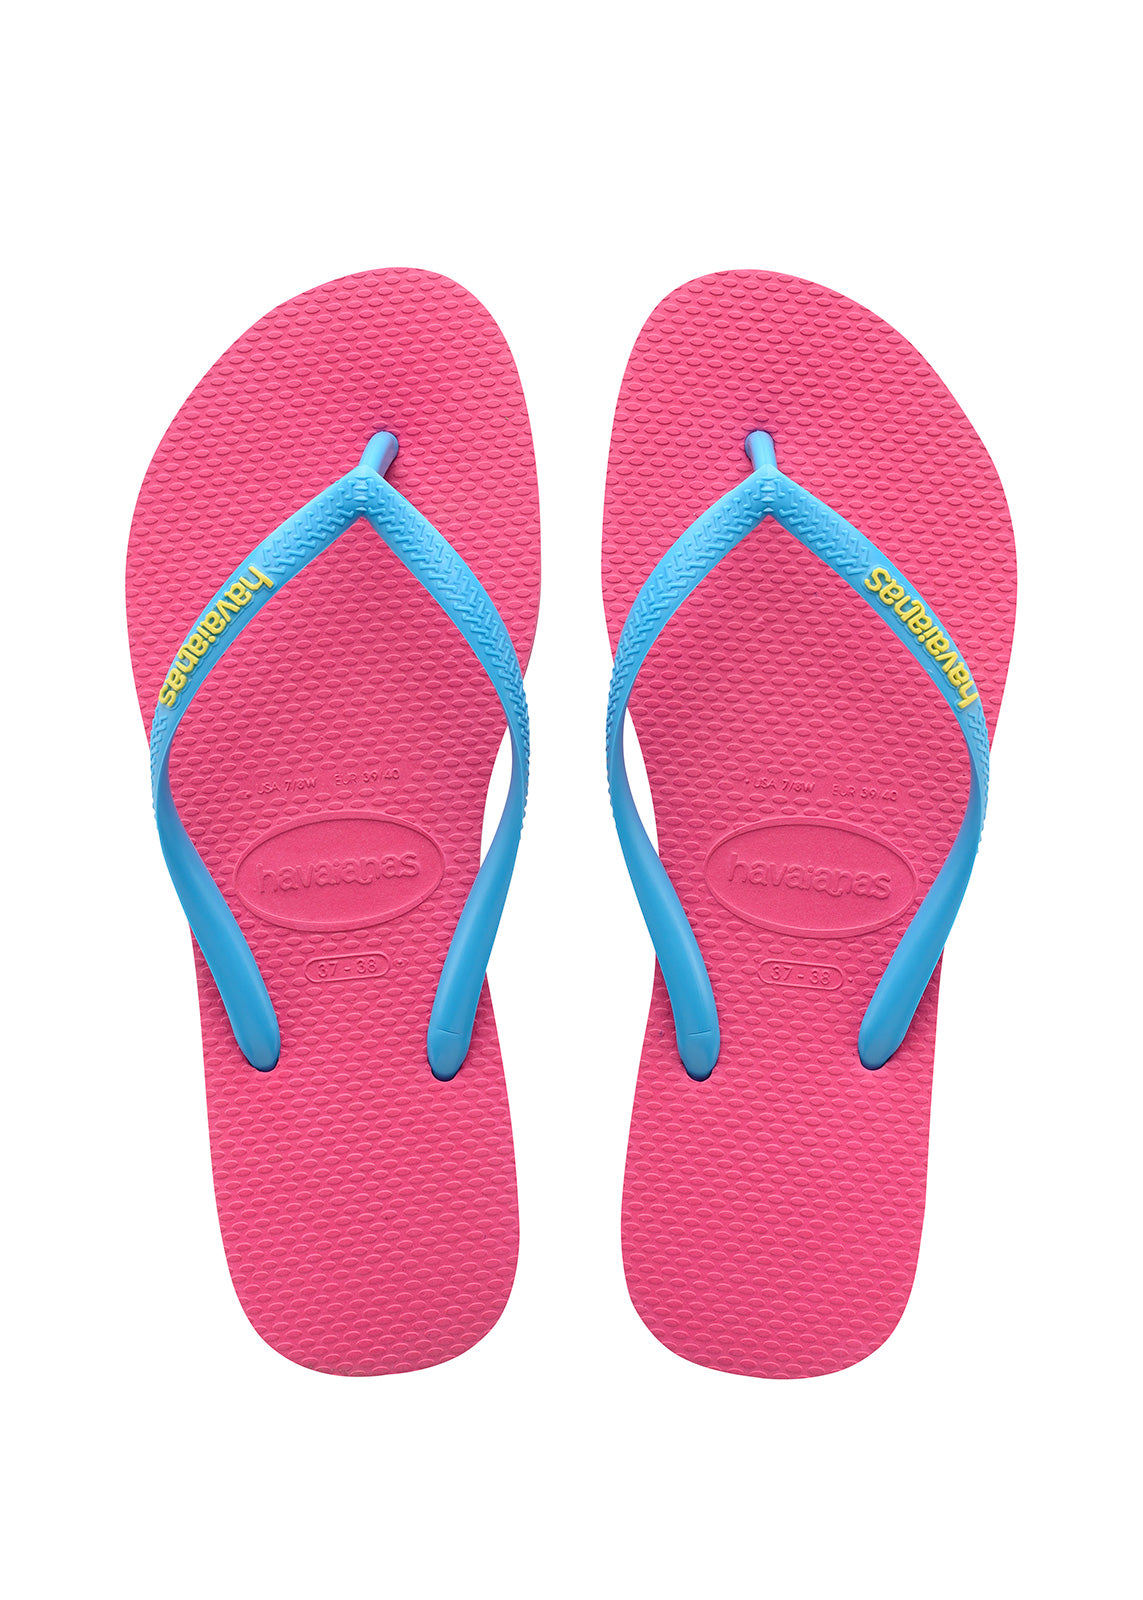 Havaianas Slim logo pop-up flip-flop papucs, rózsaszín - MYBRANDS.HU